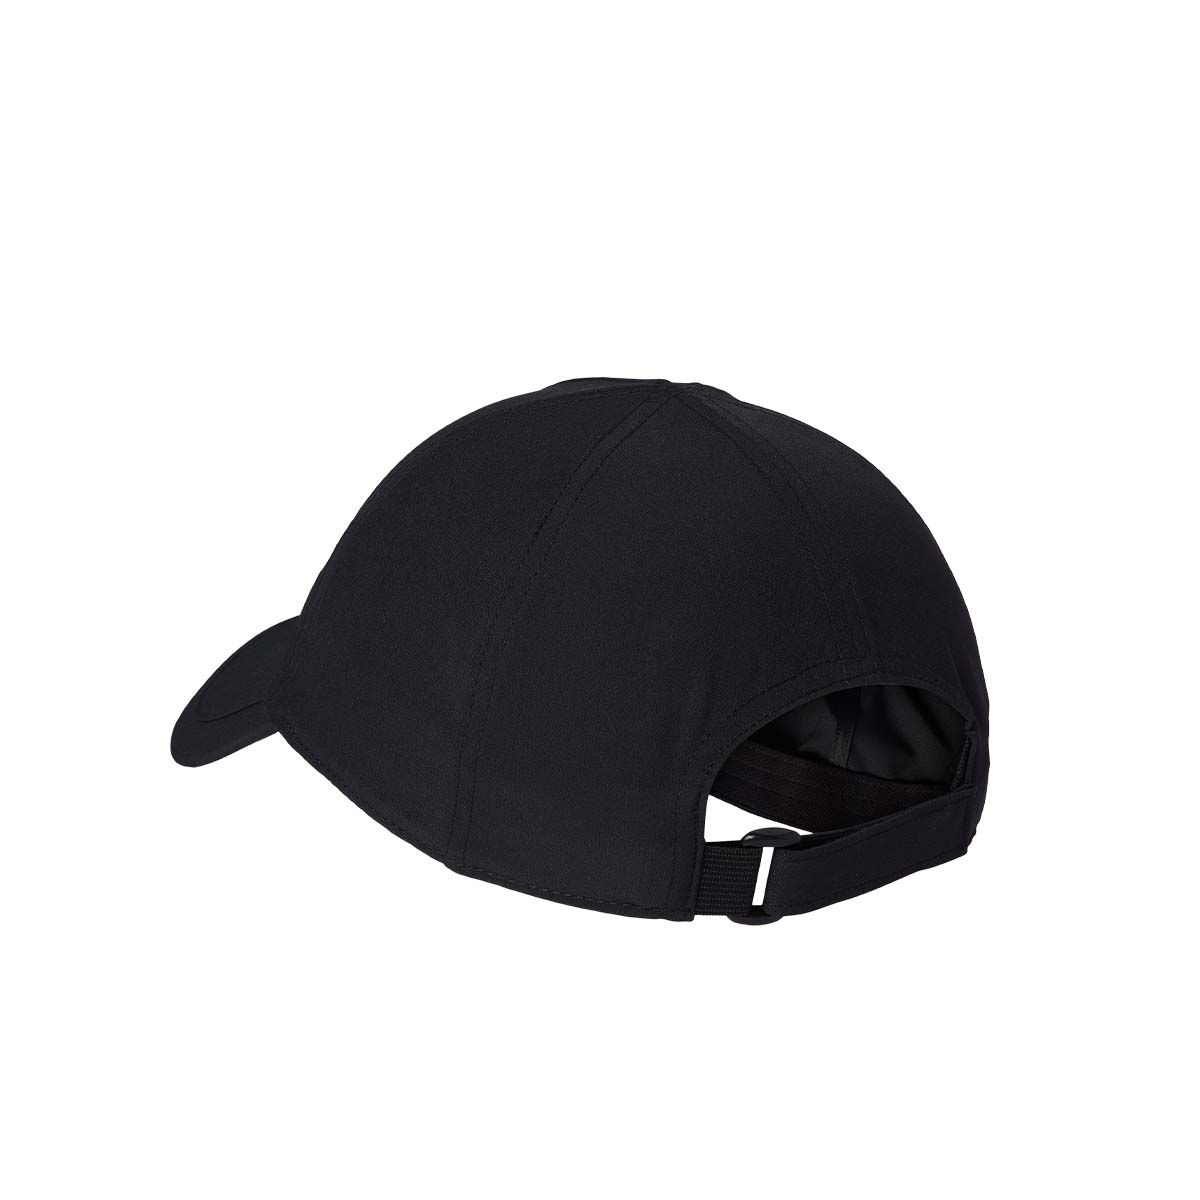 Asics PF Cap Black כובע אסיקס